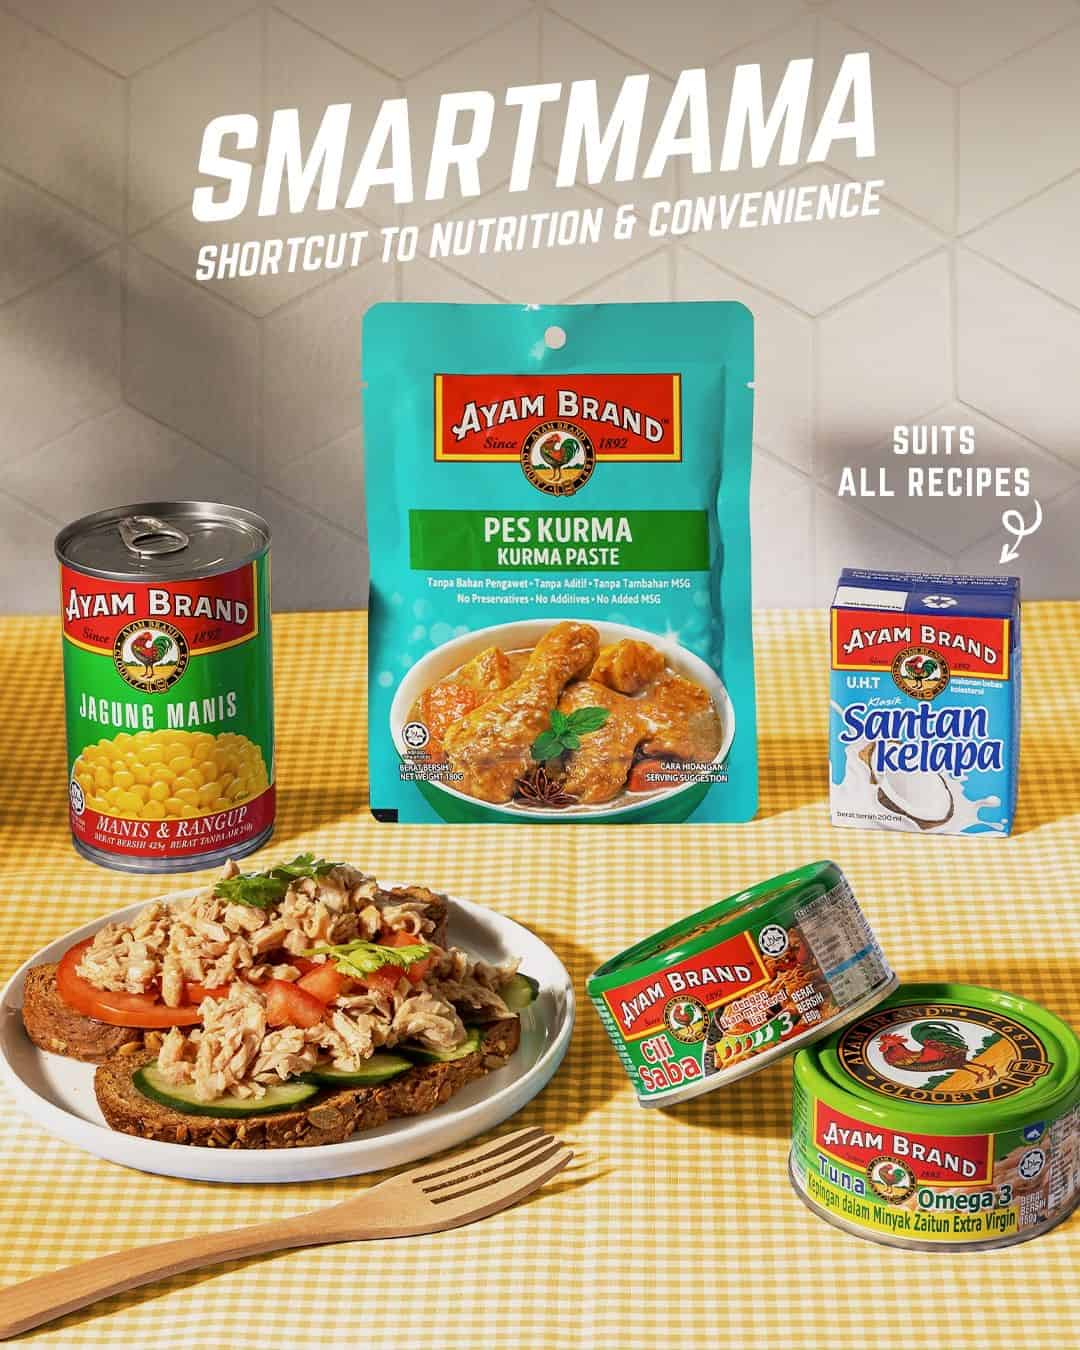 Nikmati Nilai SeTin Bagi Seisi Keluarga Bersama Sardin & Mackerel Ayam Brand™ Yang Kaya Dengan Omega-3